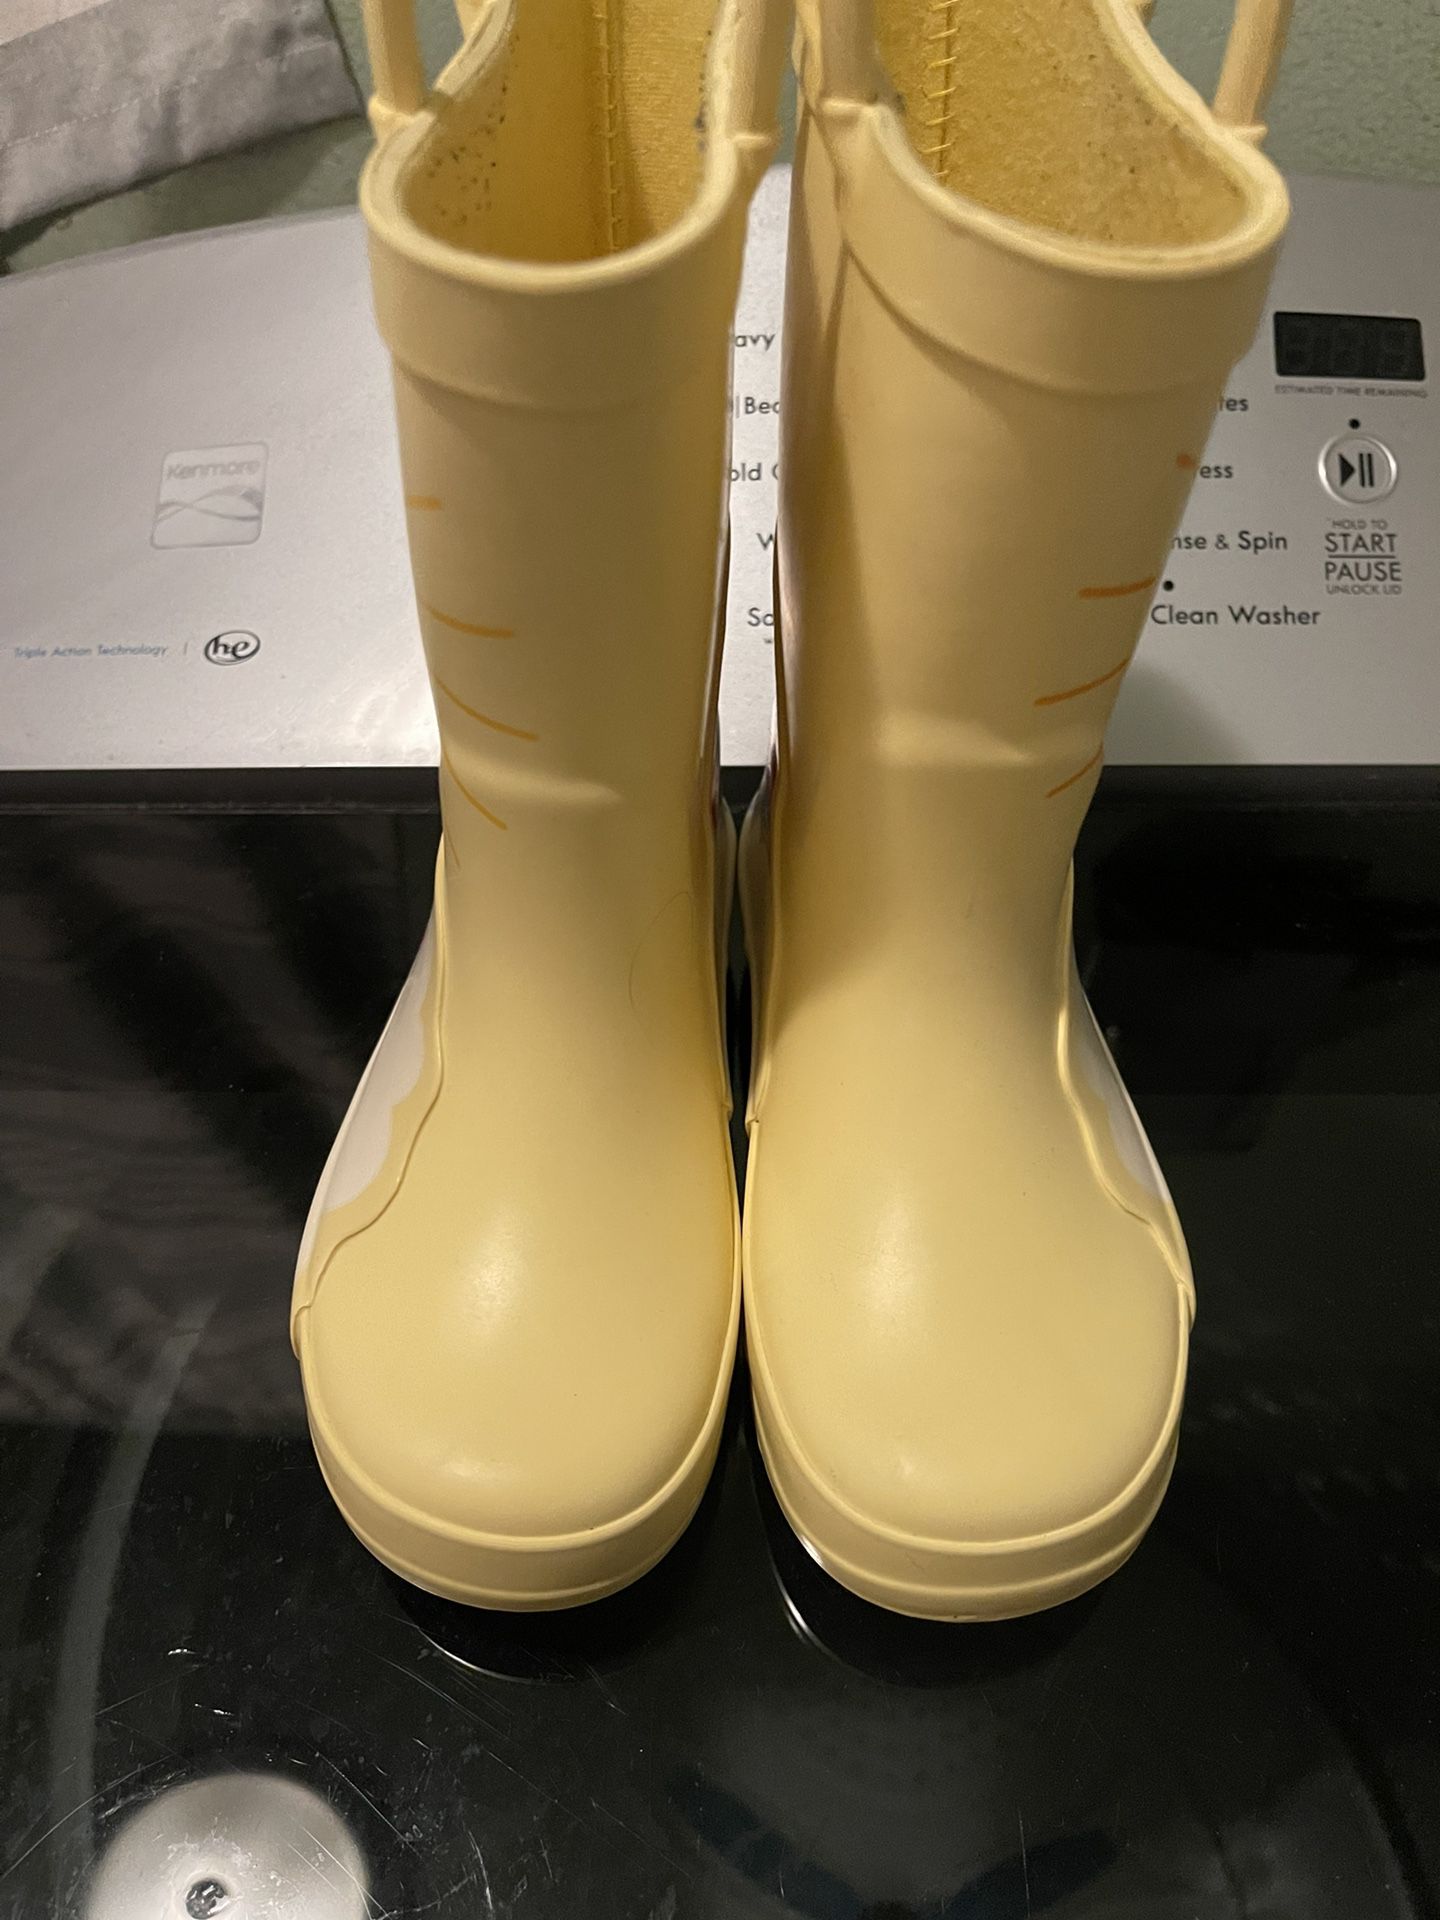 Toddler Rain Boots 